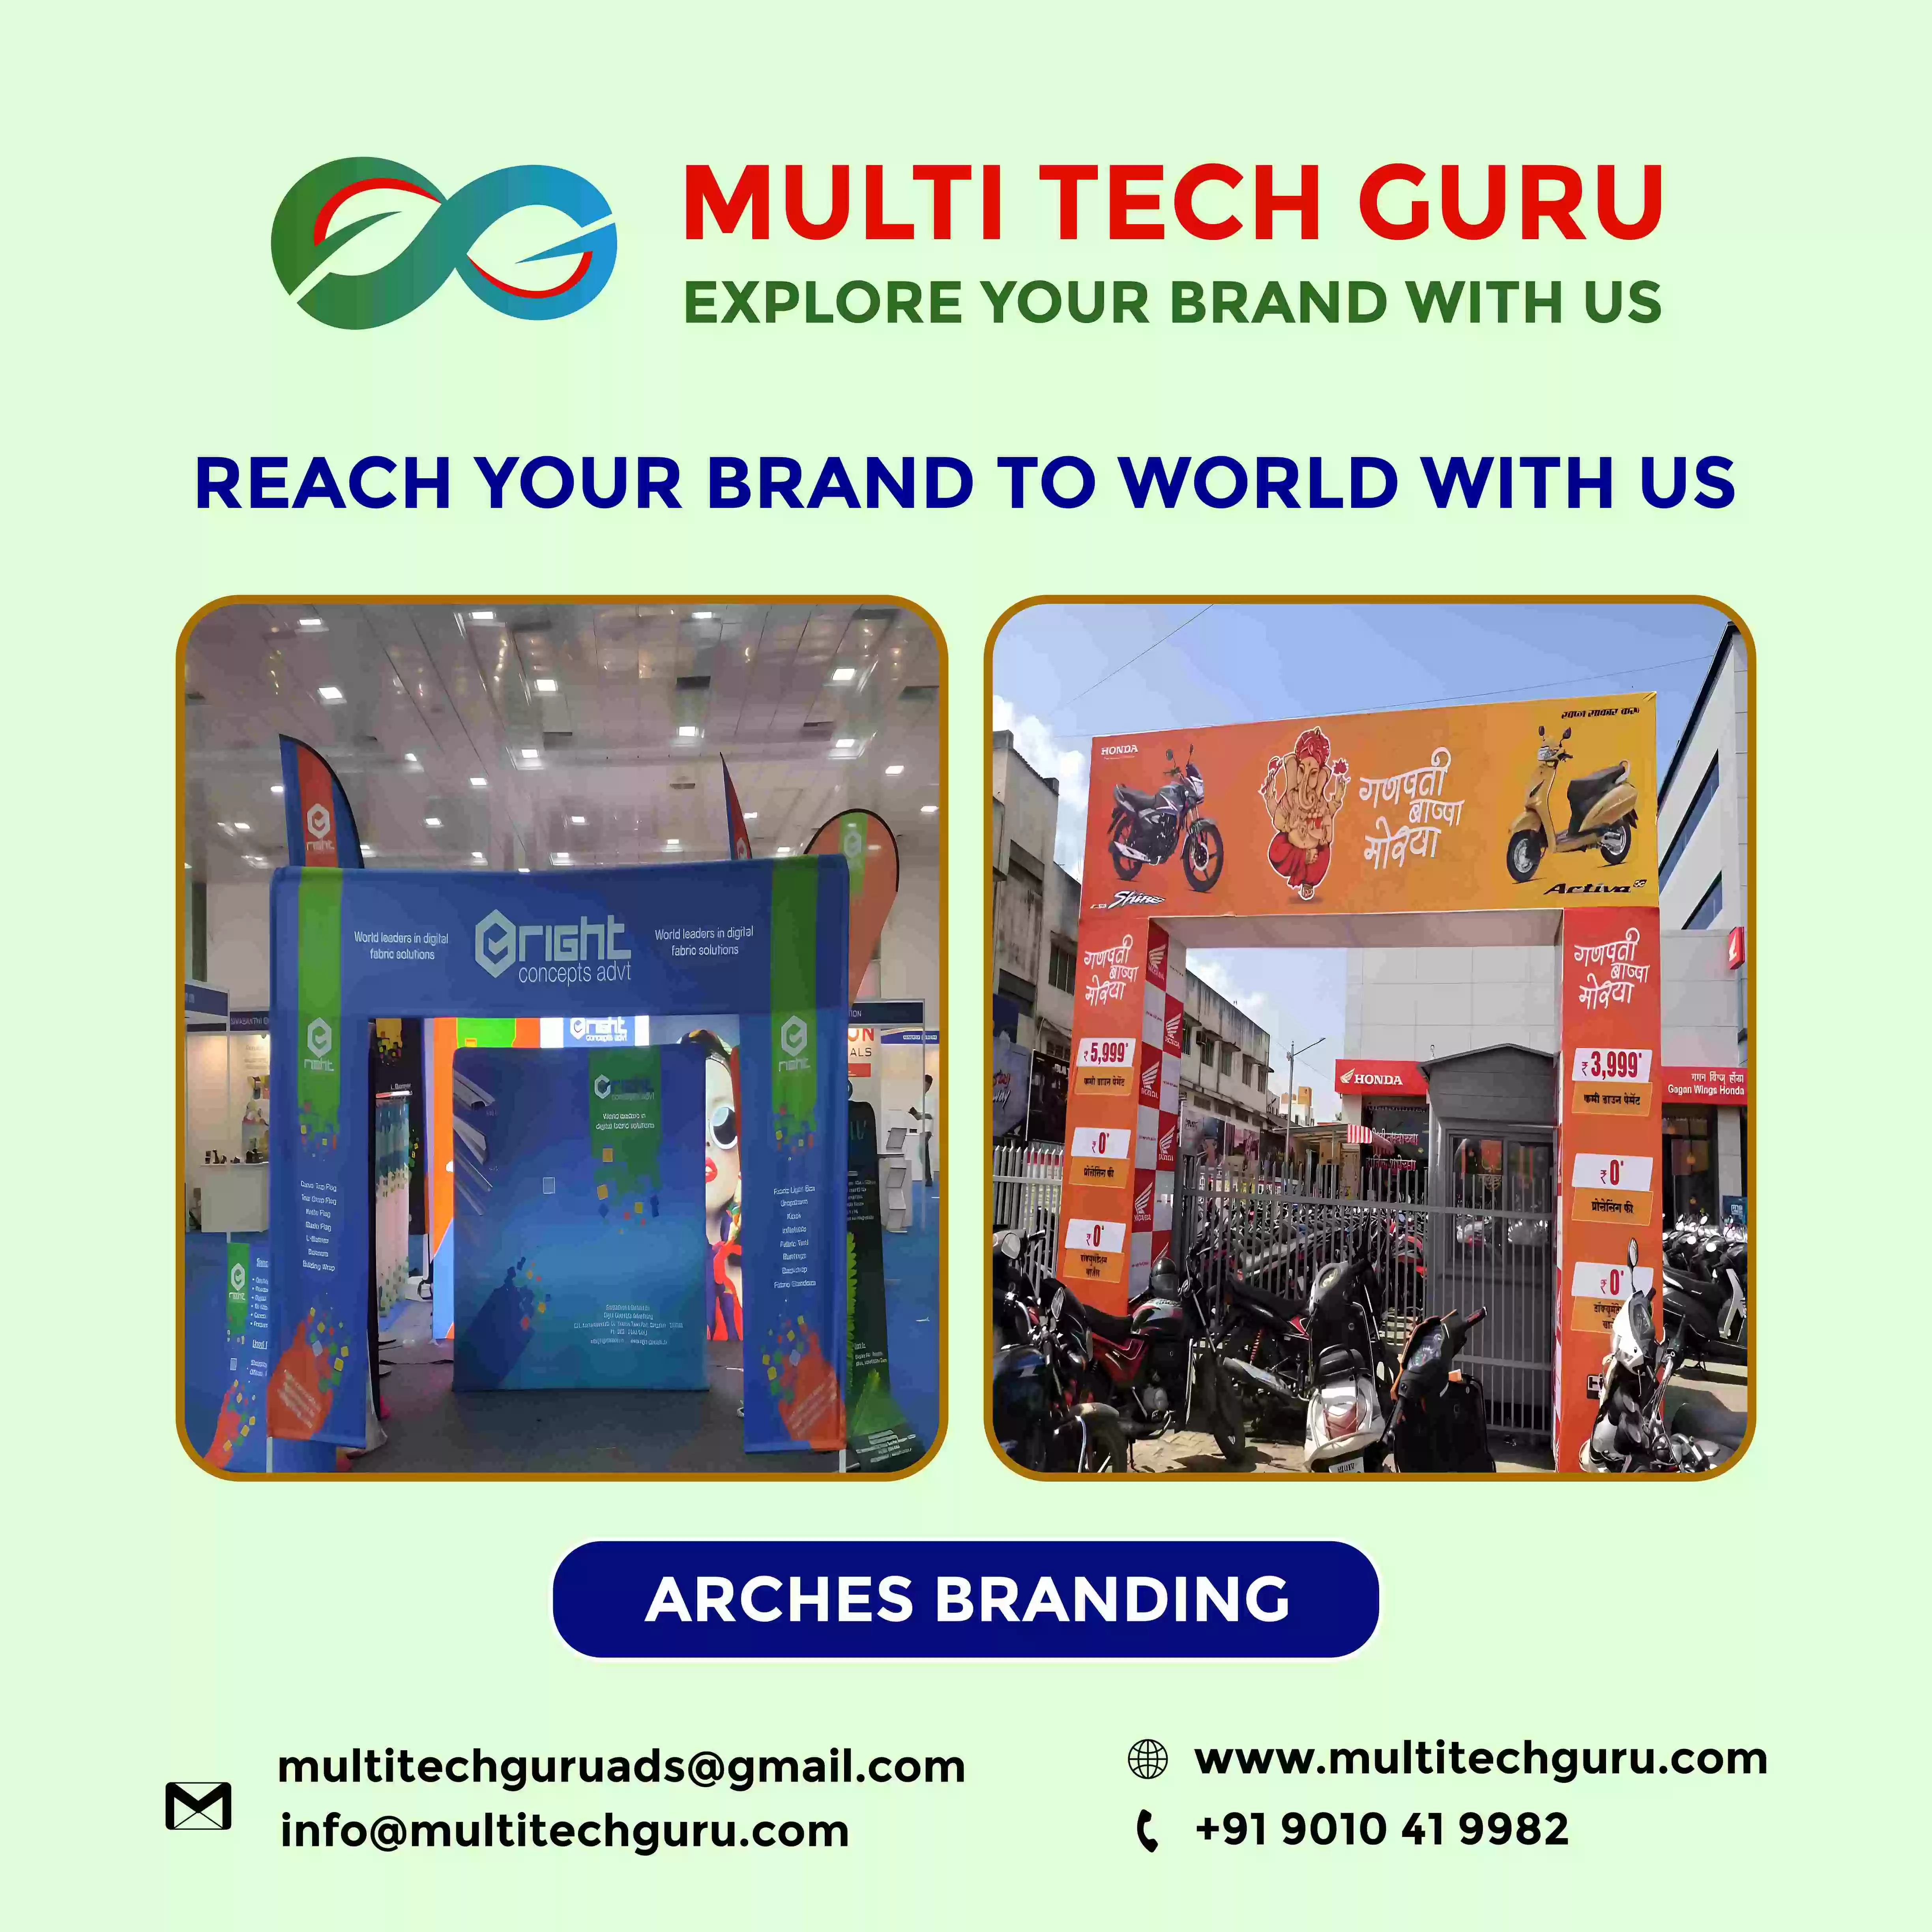 Arches-Branding-advertising-marketing-Multitechguru.com-9010419982-Outdoor-media-advertising-Print-Media-Services.jpg